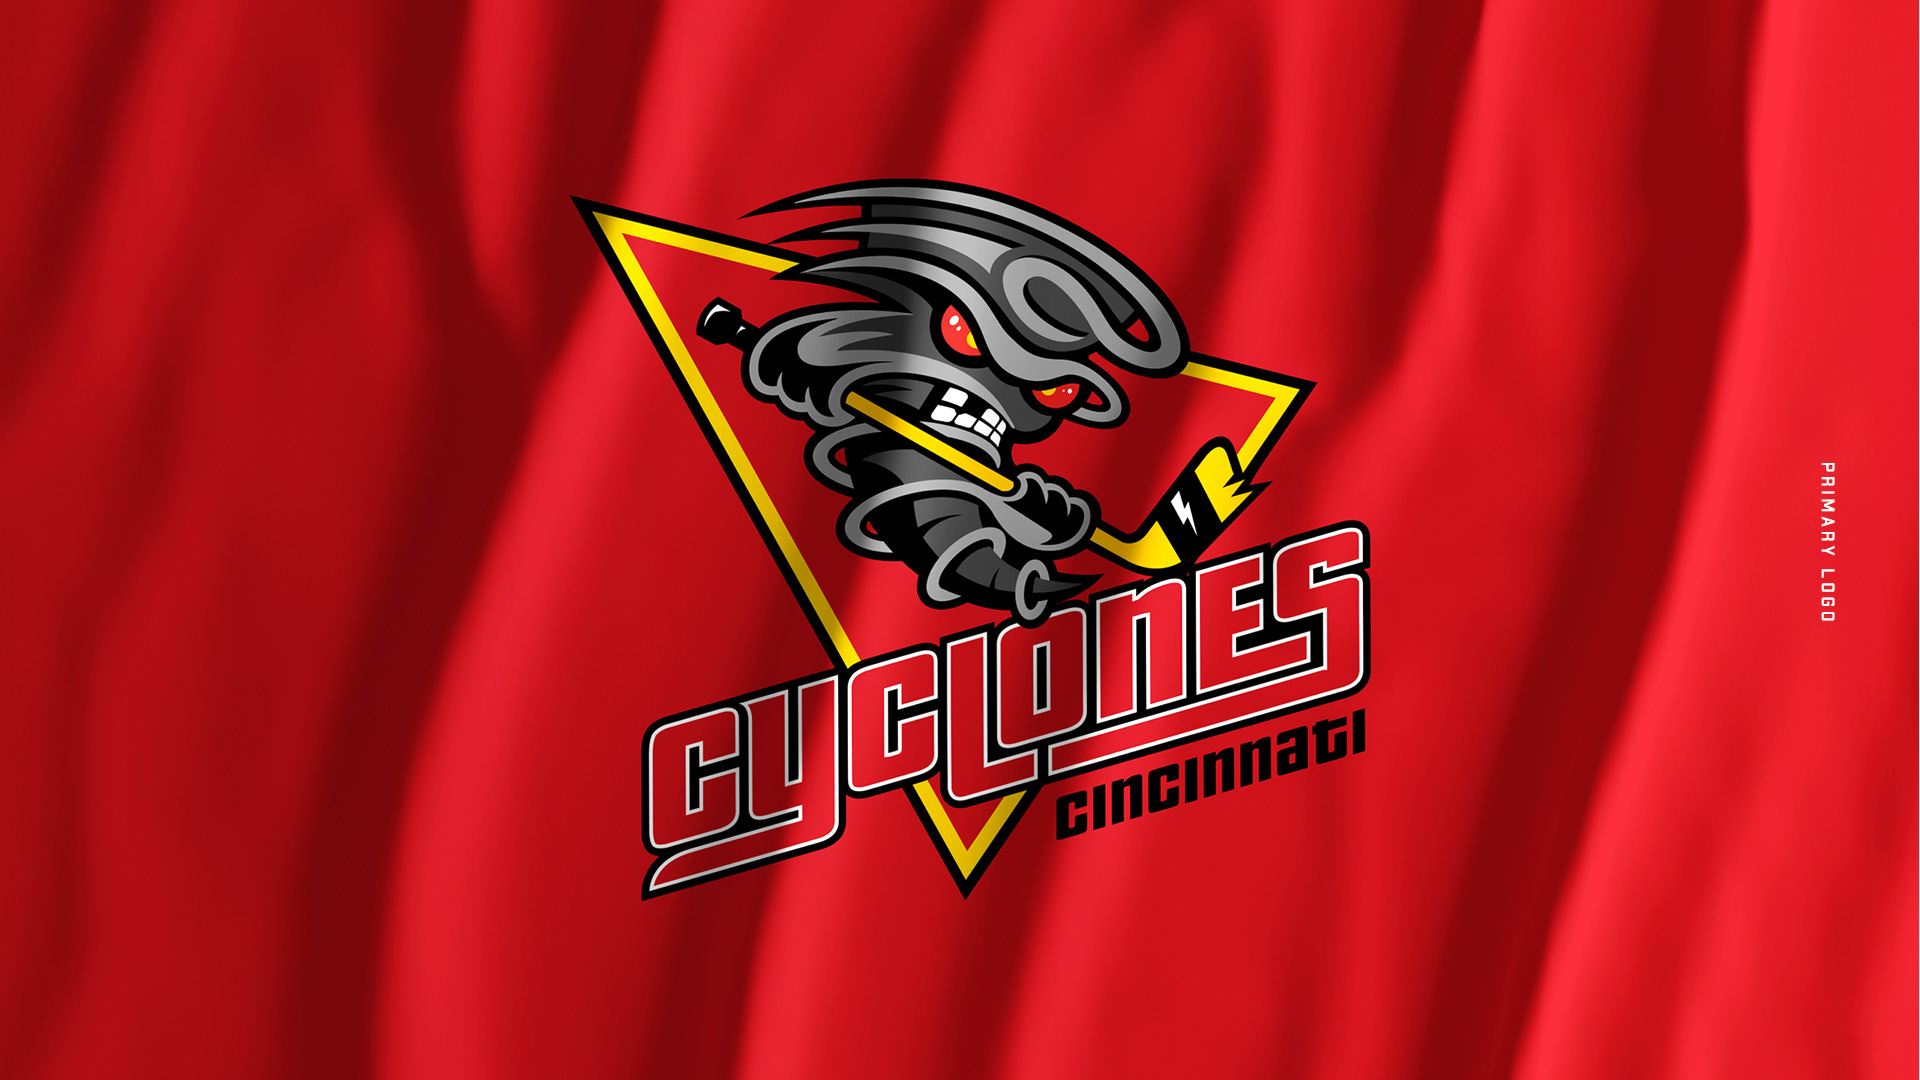 Cincinnati Cyclones unveil new logo, branding